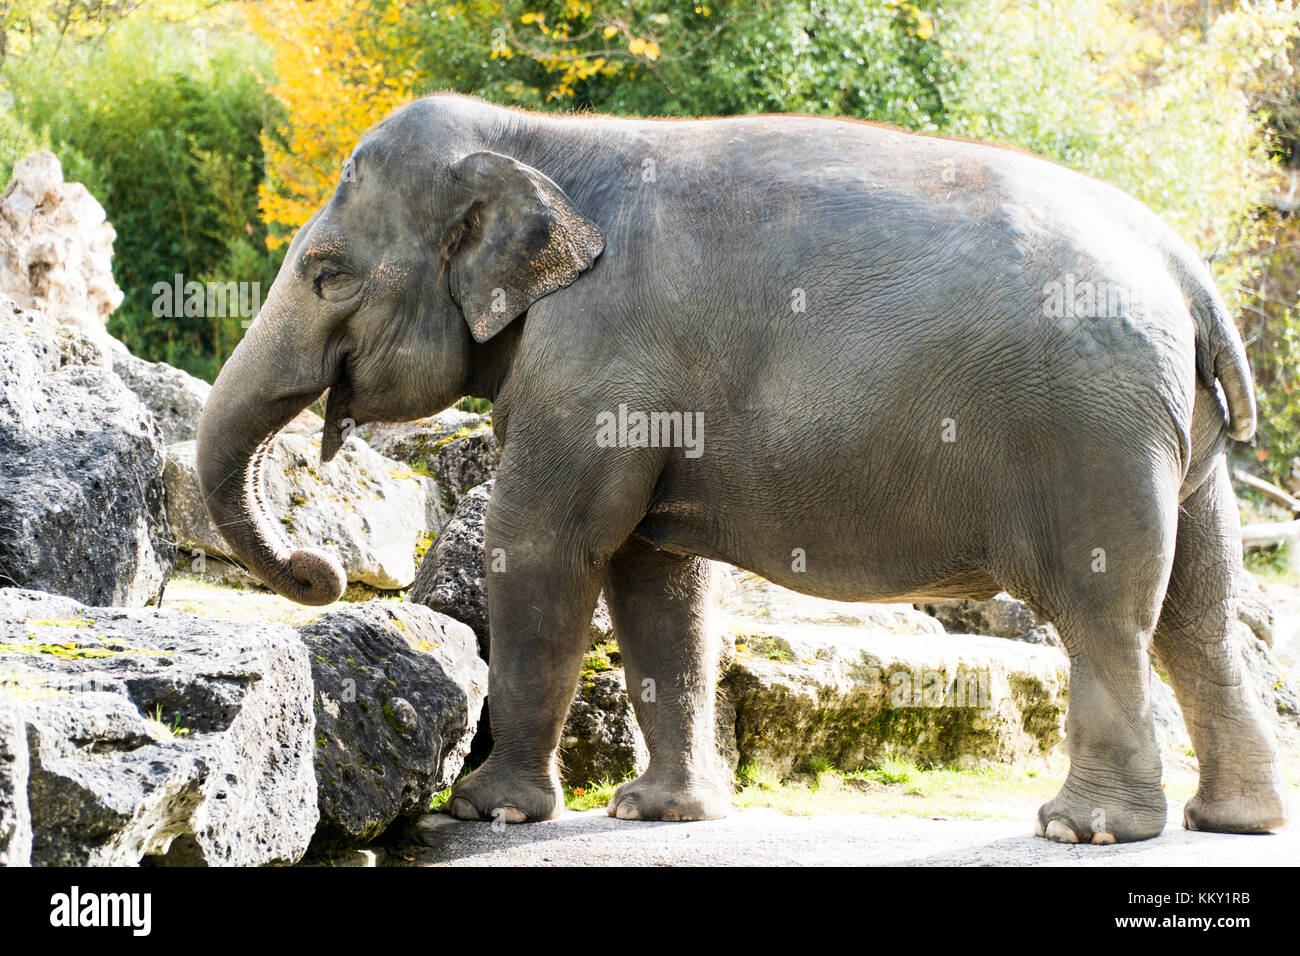 Asian elephant in the zoo park Hellabrunn, Munich Stock Photo